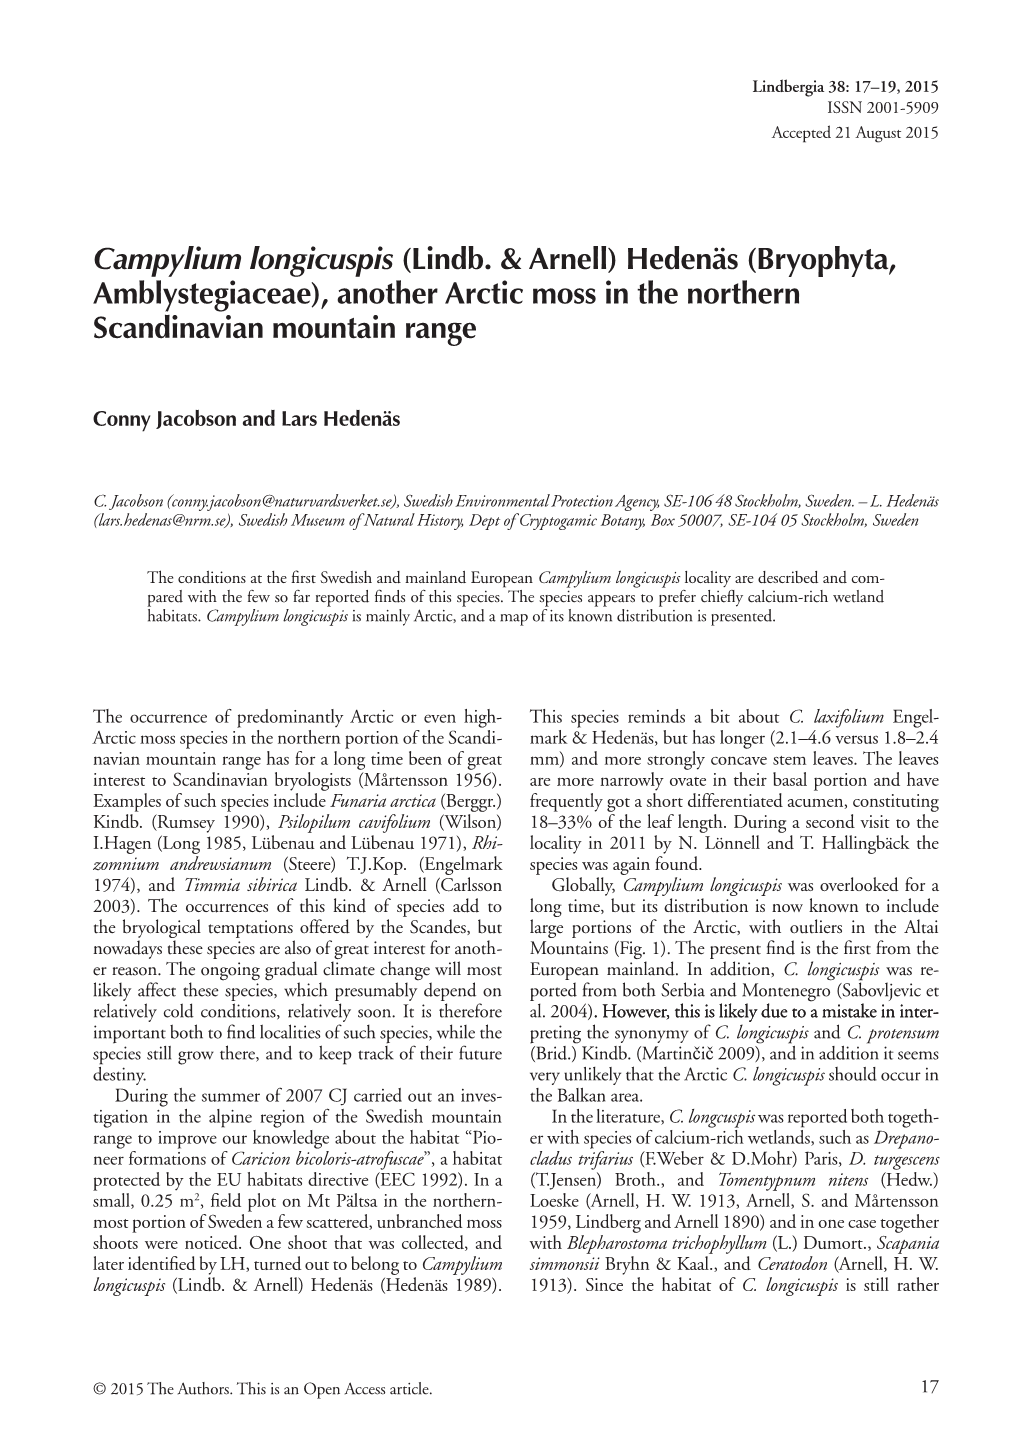 Campylium Longicuspis (Lindb. & Arnell) Hedenäs